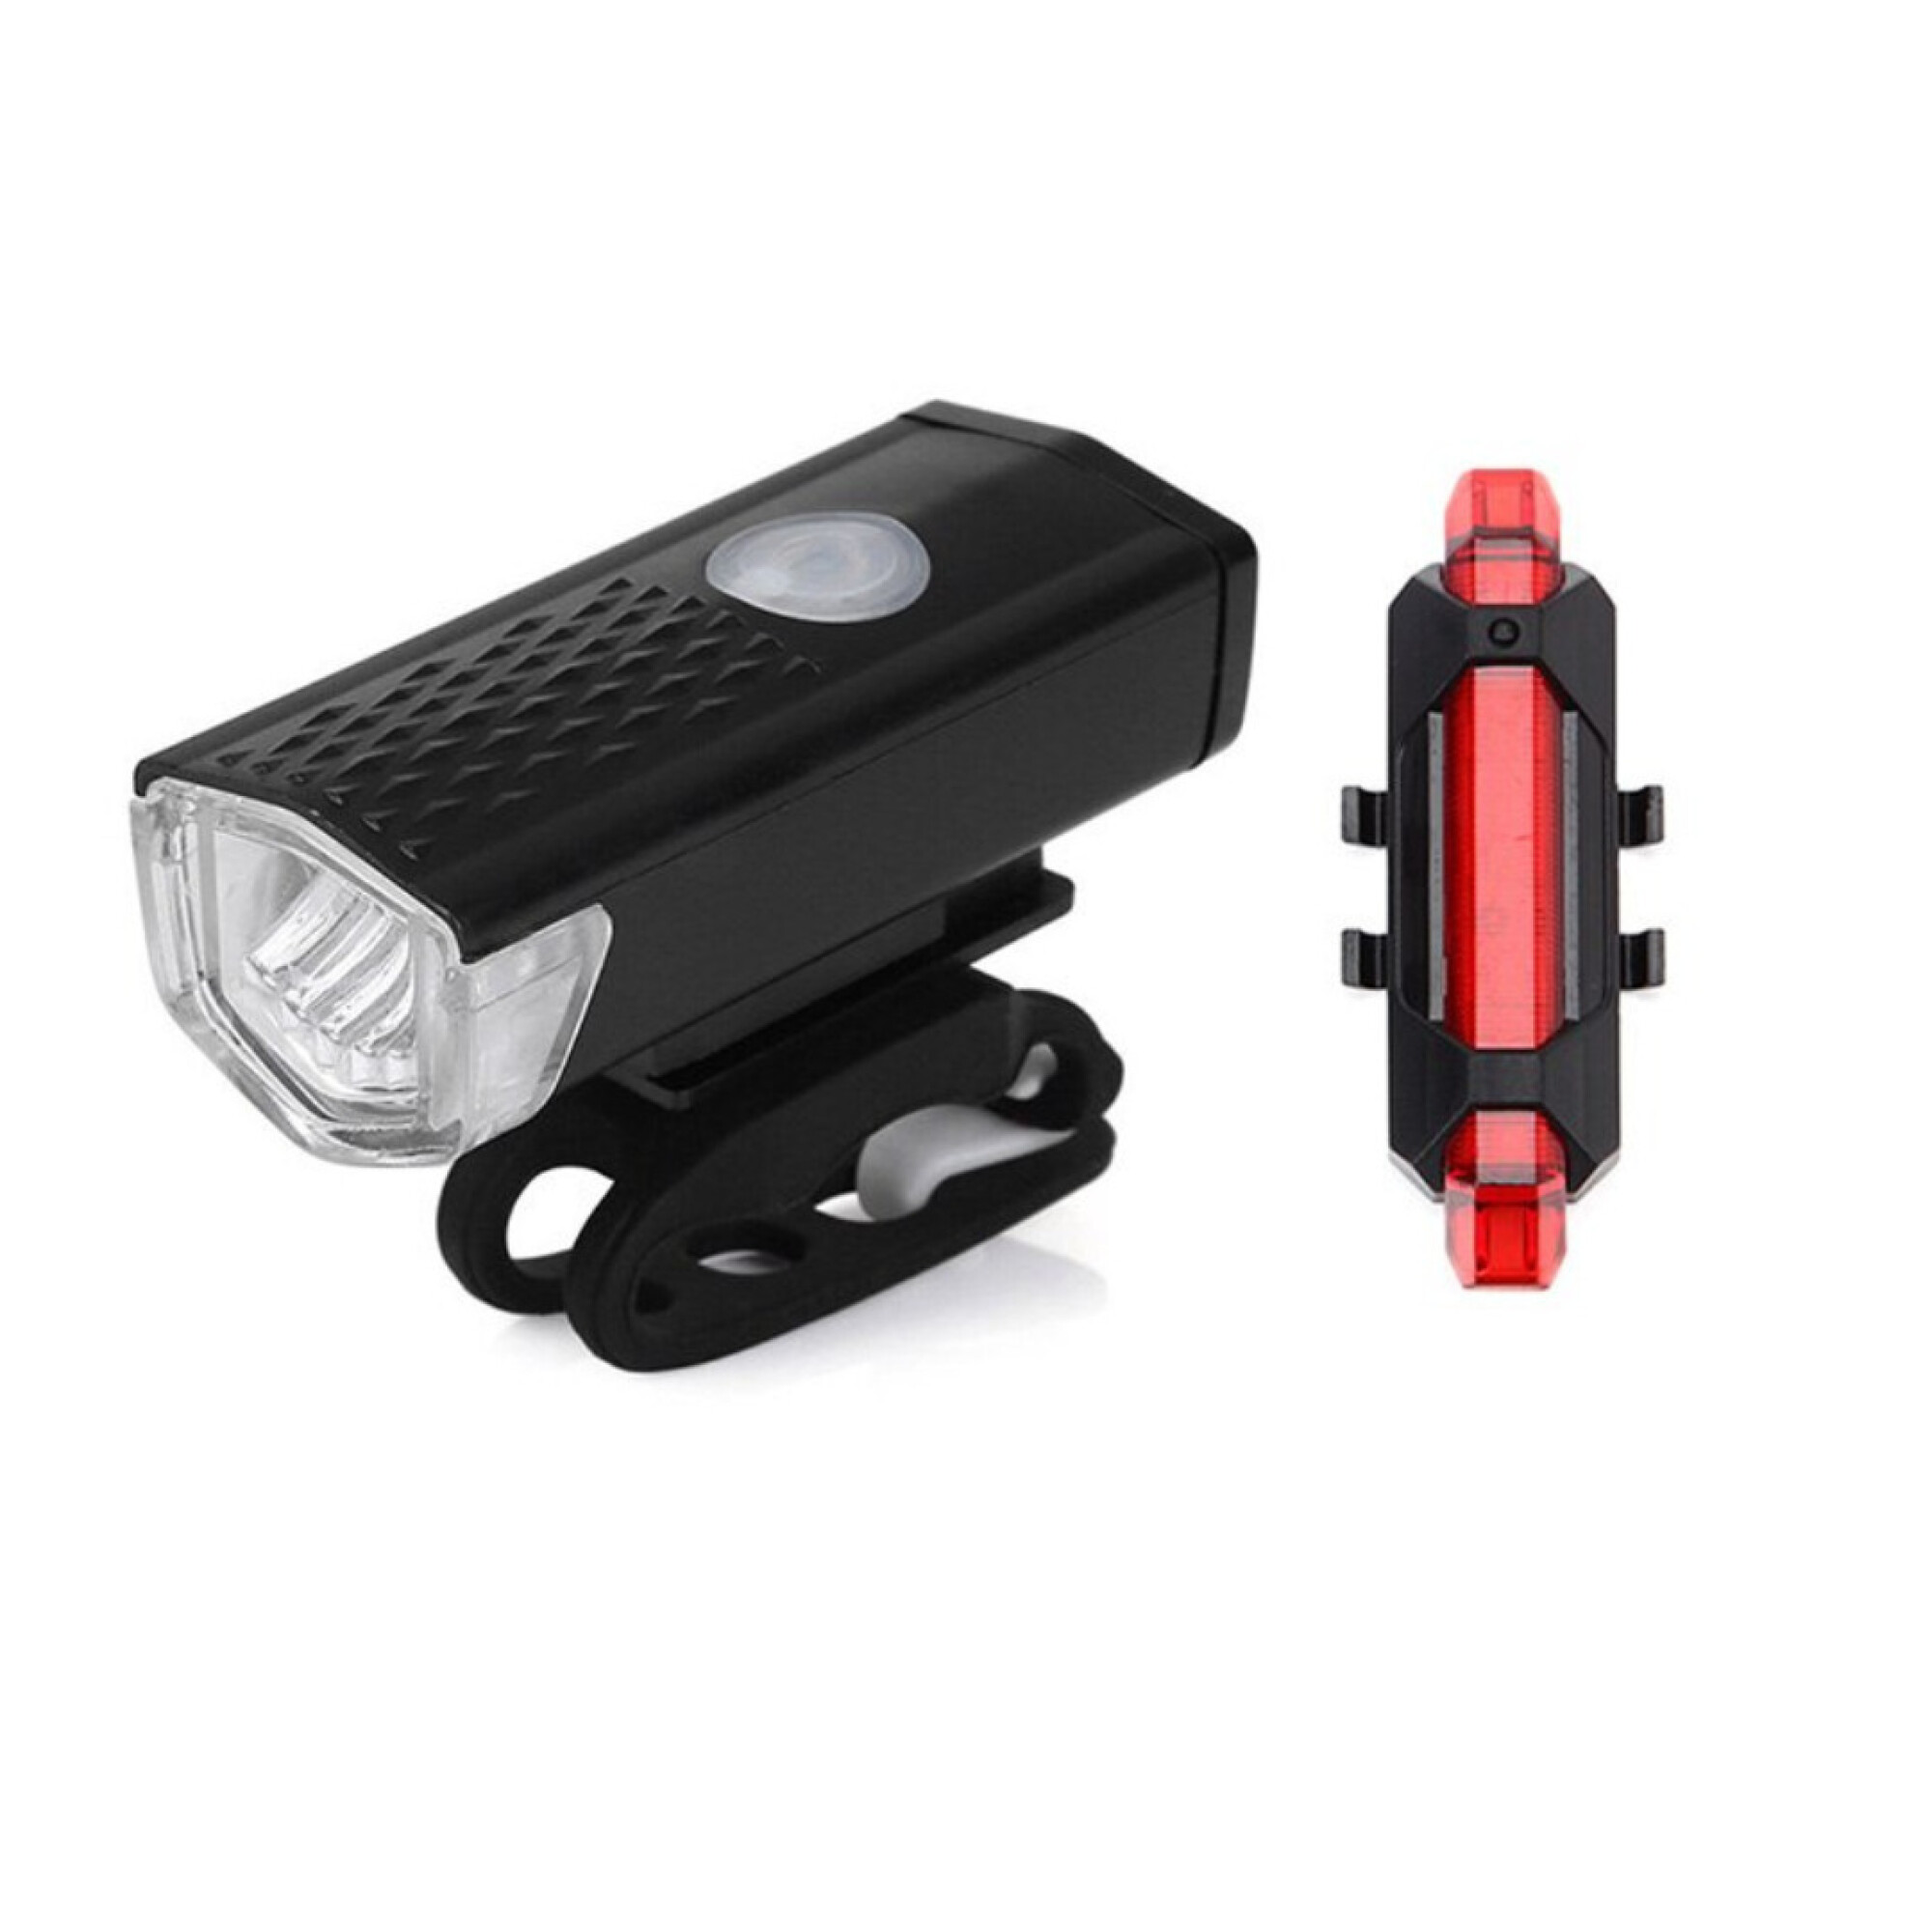 Nuevas Luces Led recargables USB de Alta potencia para Bicicleta 